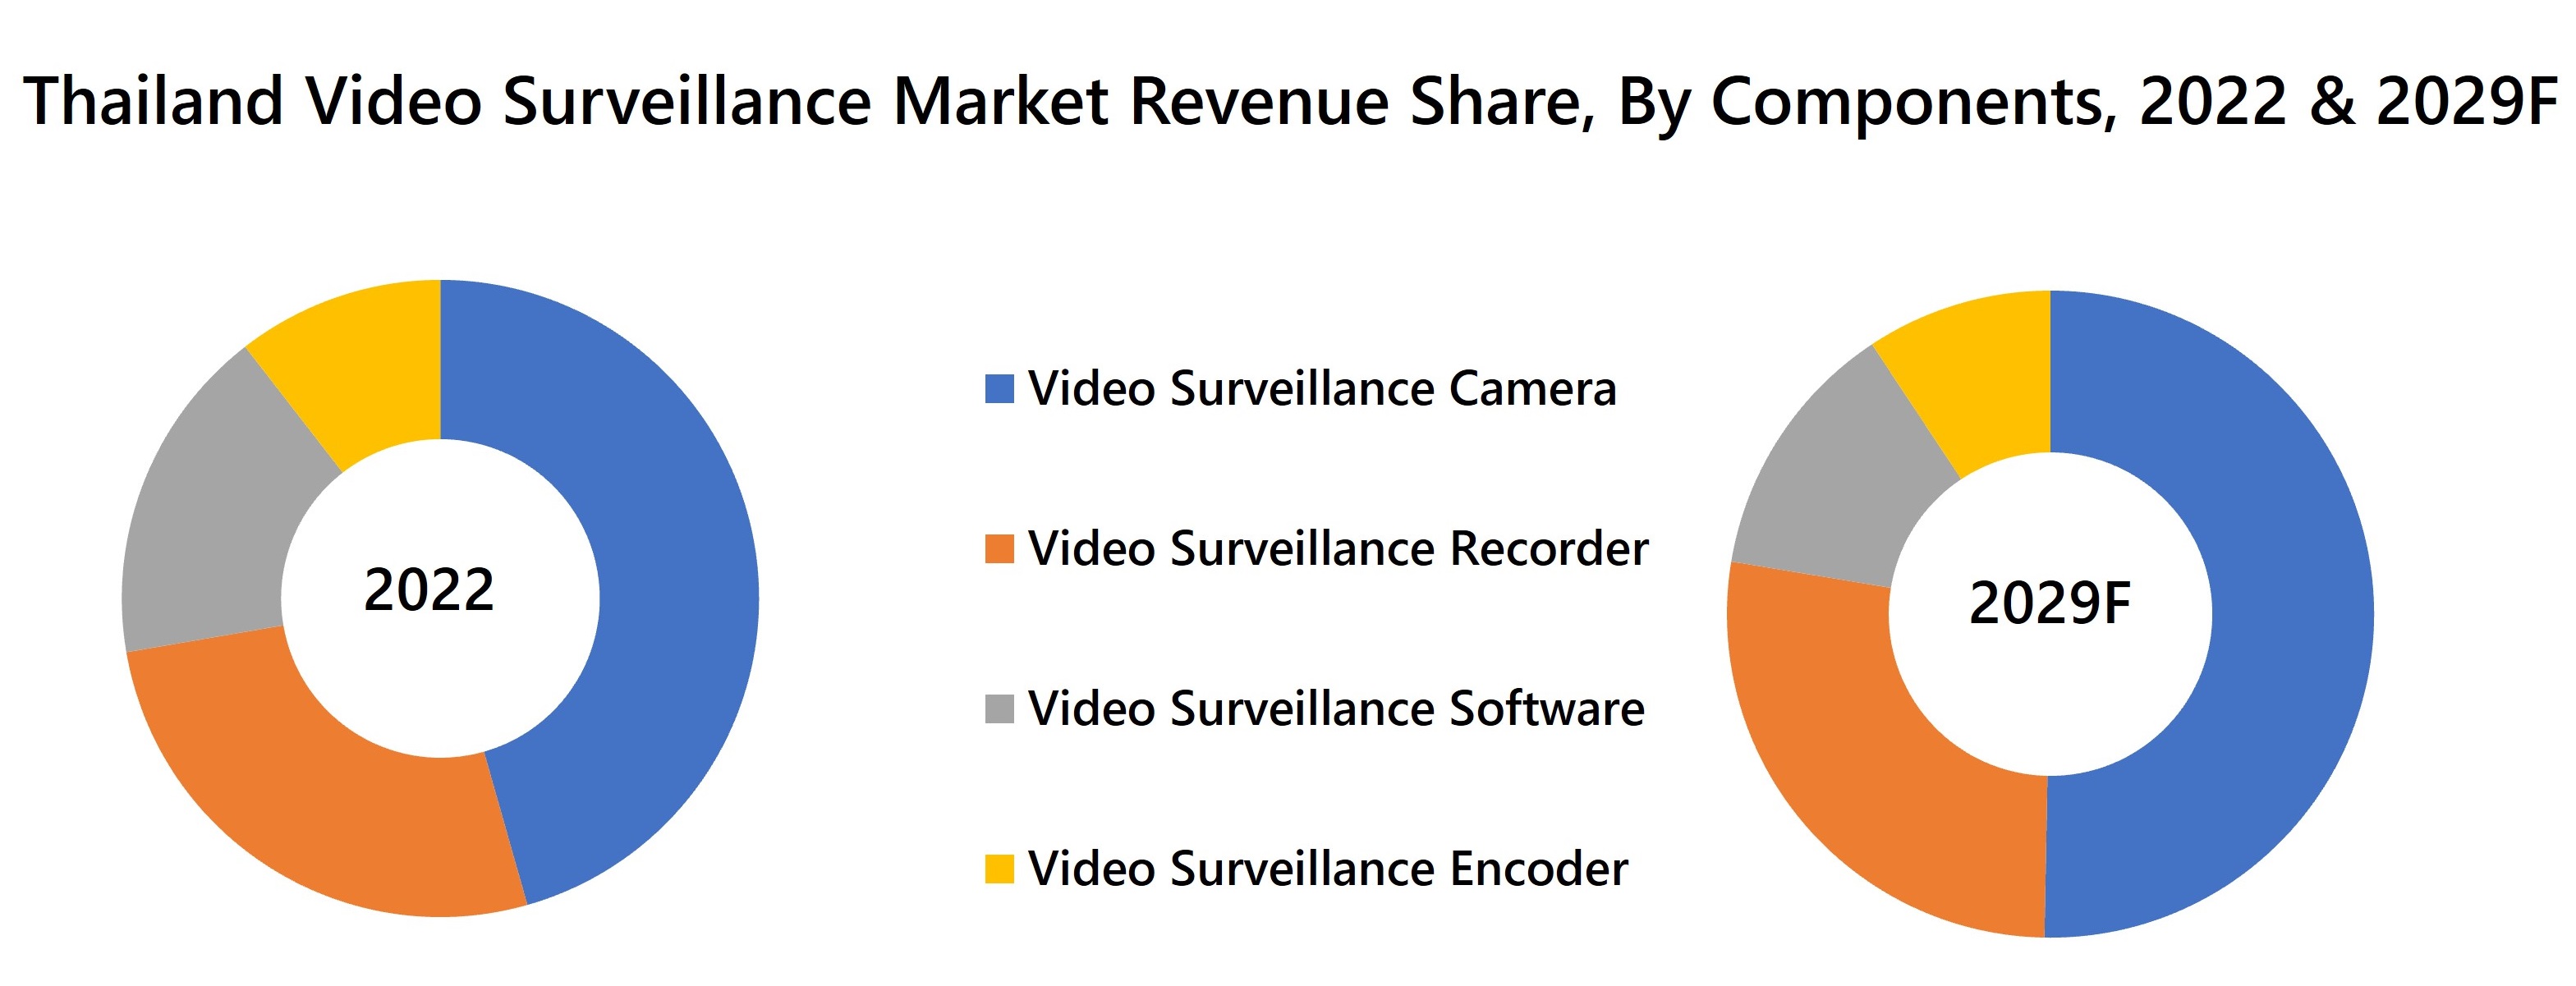 Thailand Video Surveillance Market Revenue Share